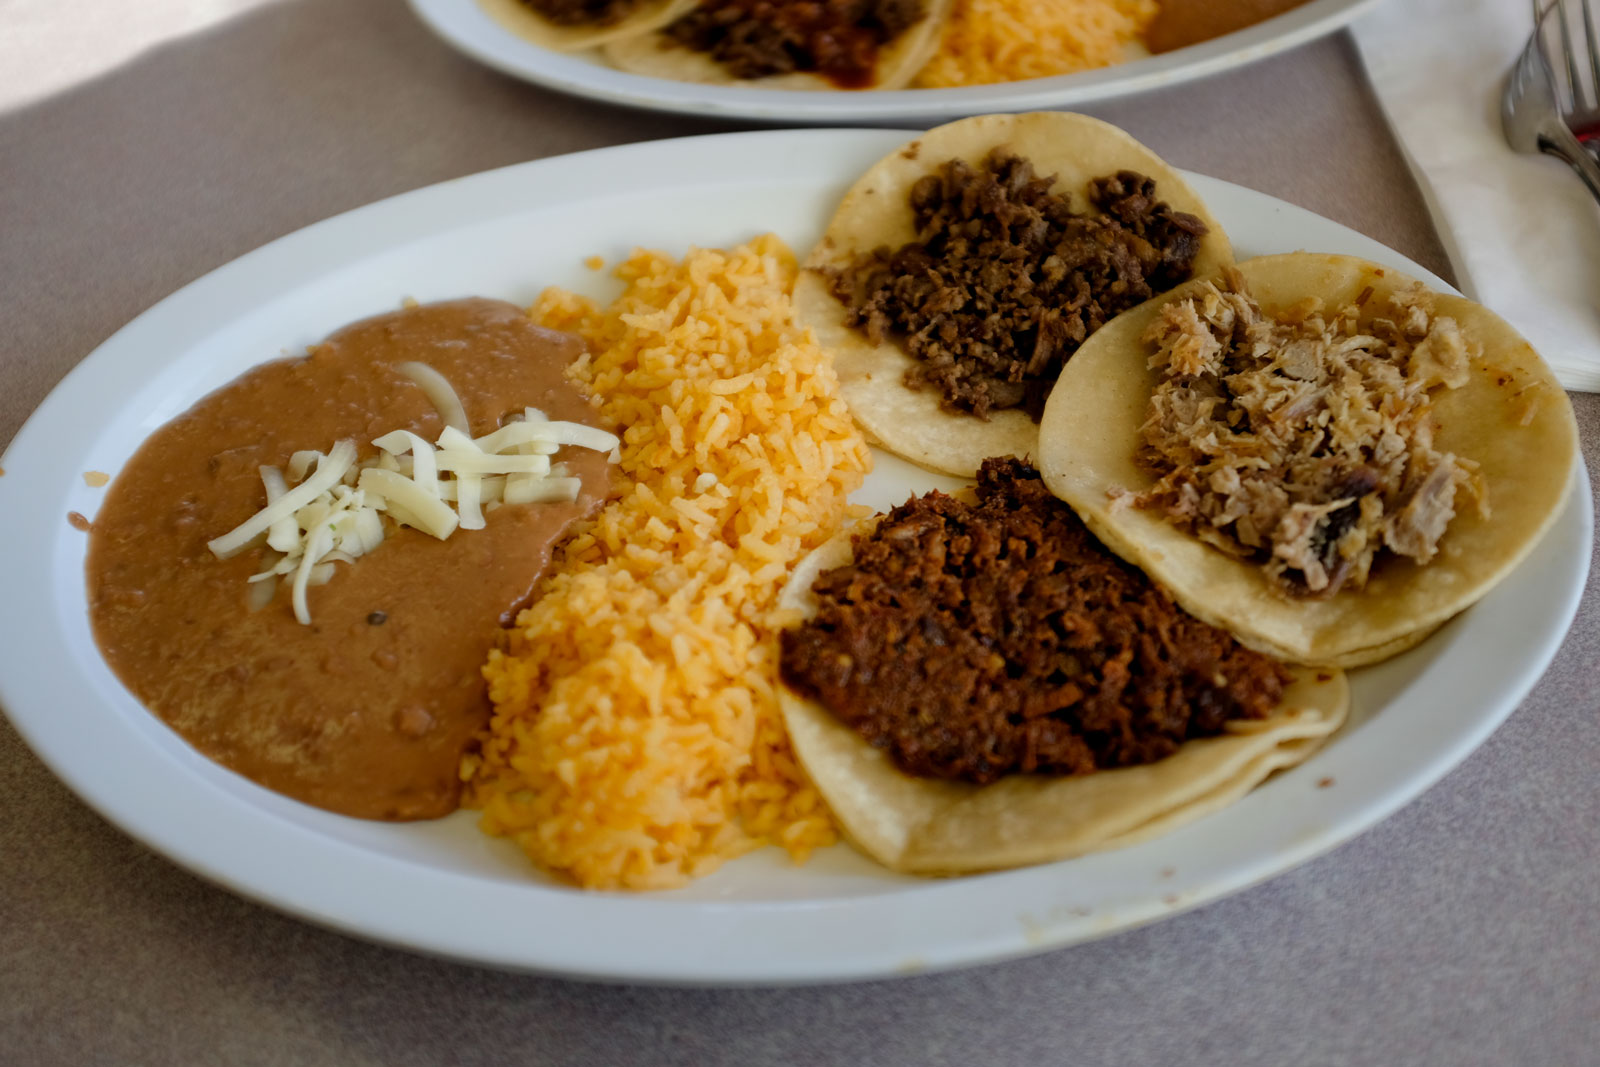 A plate of tacos, rice, and beans at El Taco de Mexico 